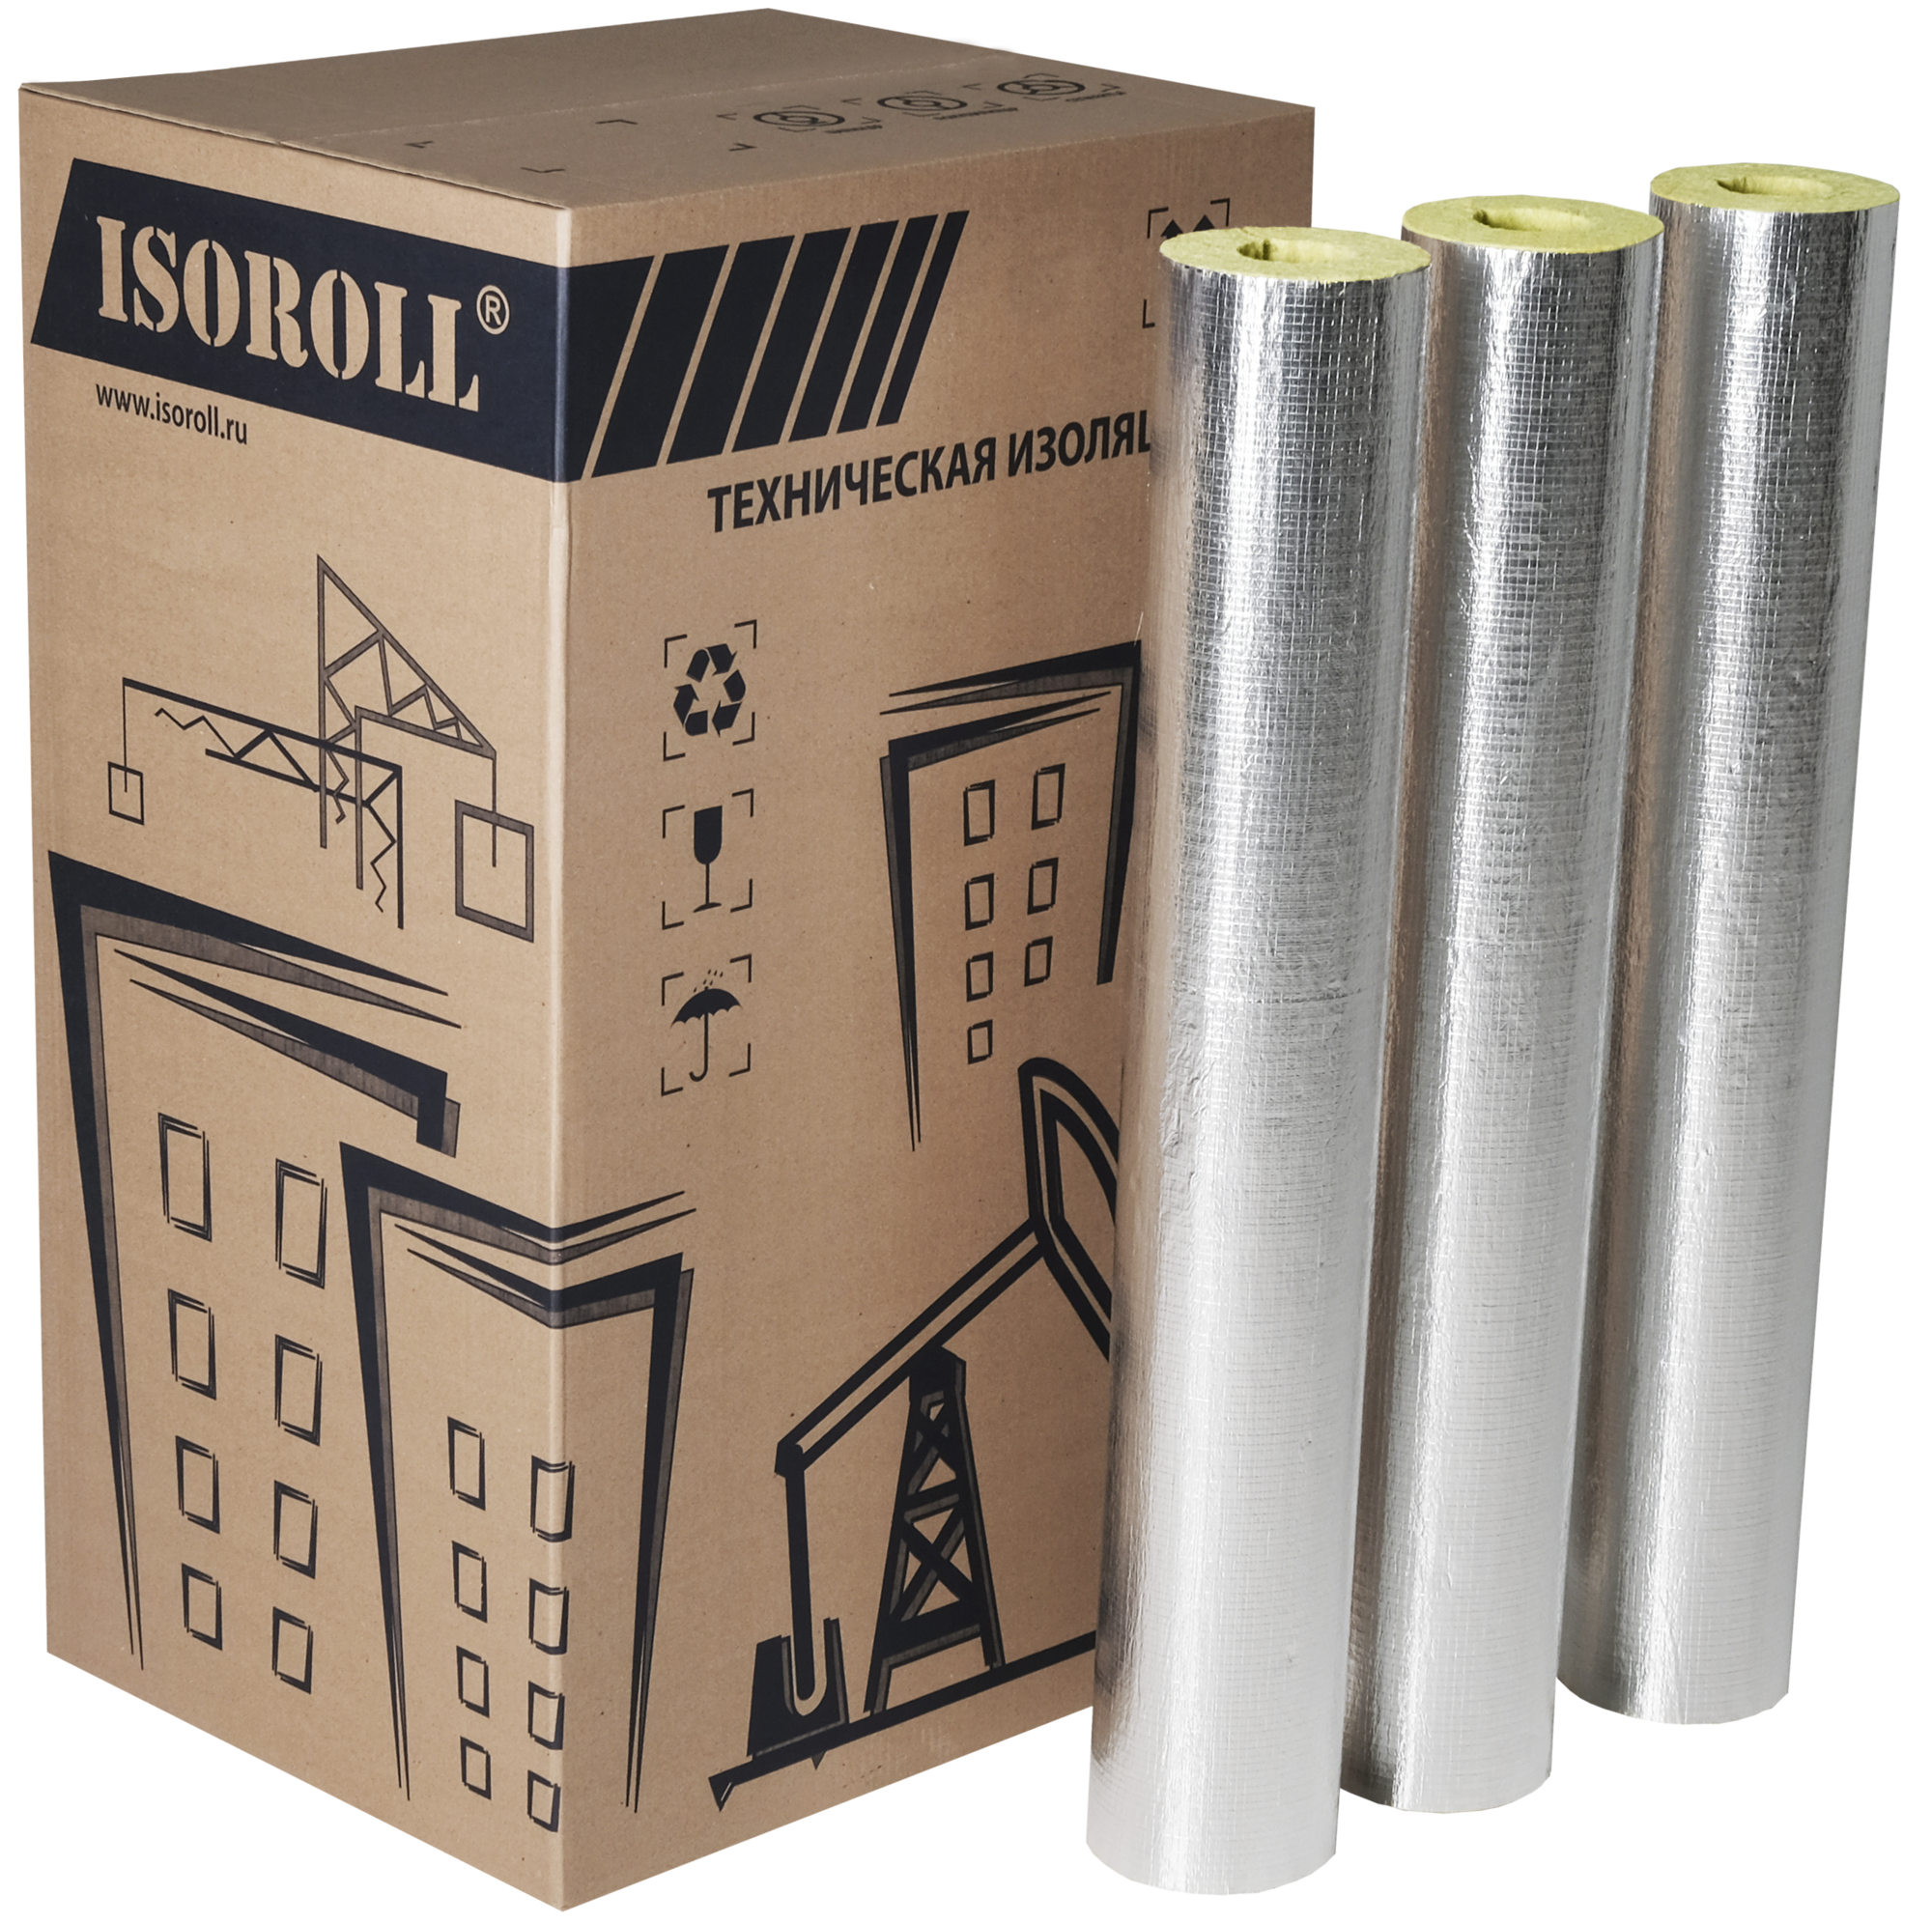 Цилиндр теплоизоляционный Isoroll® с технической фольгой НГ для труб 18 мм x 40 мм